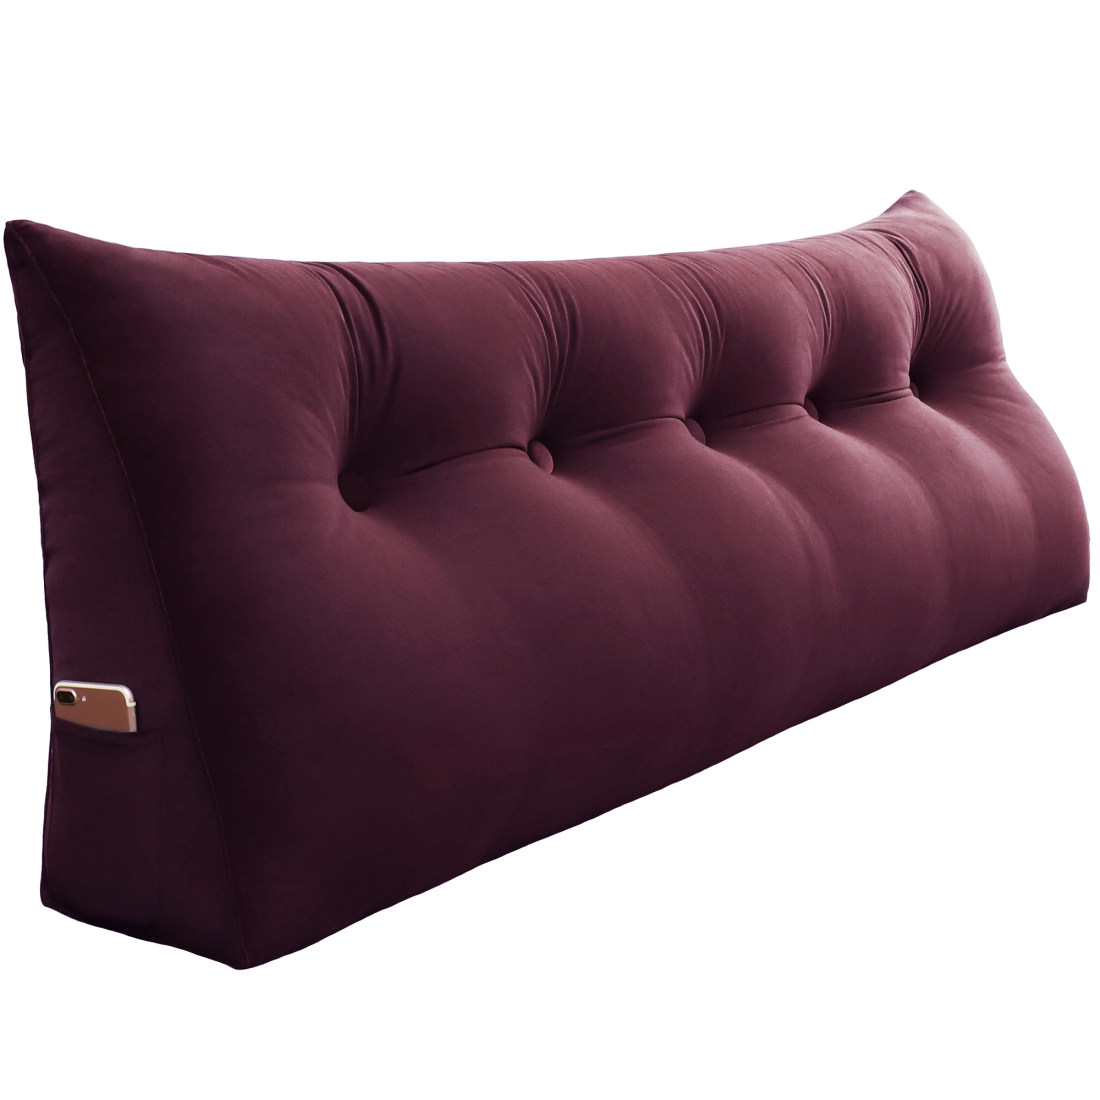 Walterdrake Burgundy Backrest Pillow